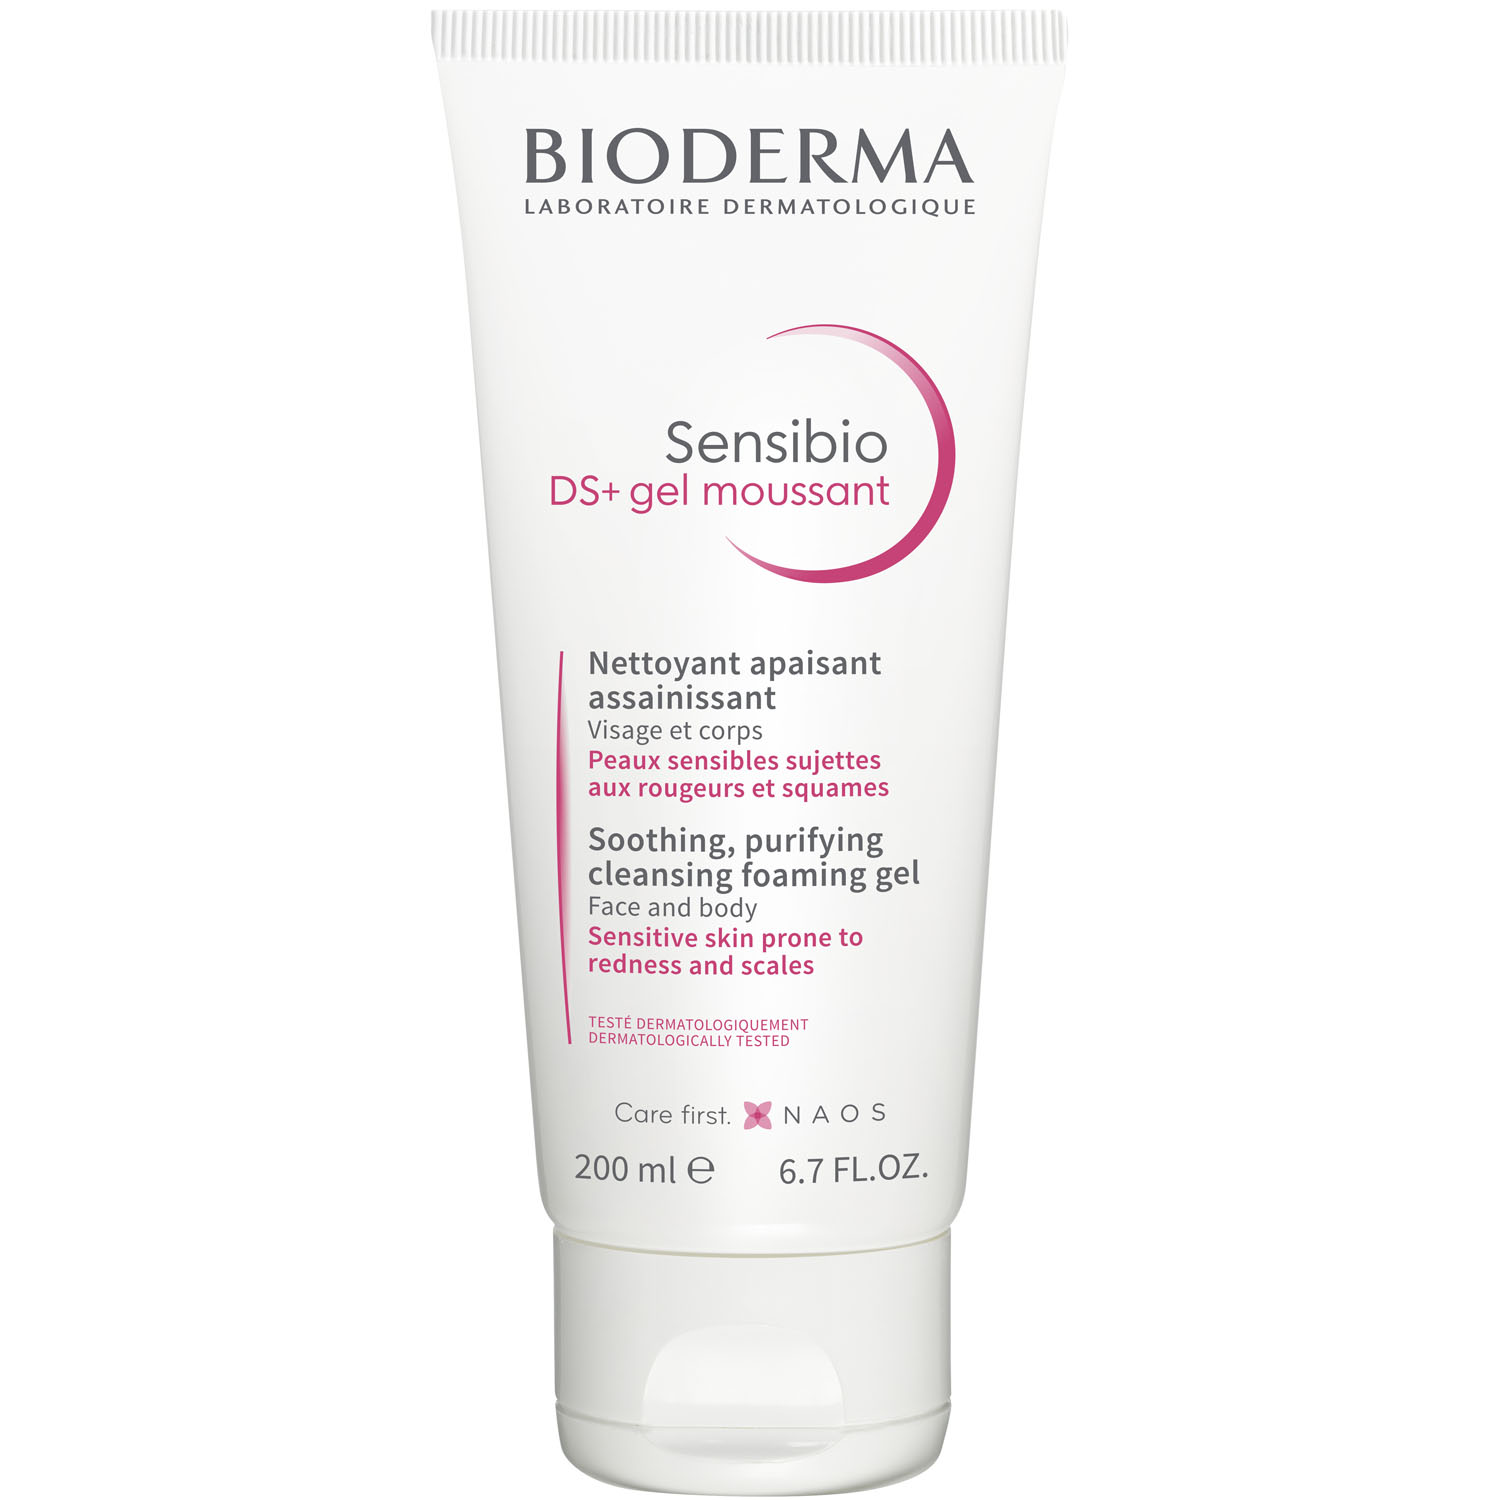 Bioderma Очищающий гель для кожи с покраснениями и шелушениями DS+, 200 мл (Bioderma, Sensibio) очищающий гель для кожи с покраснениями и шелушениями sensibio ds 200 мл